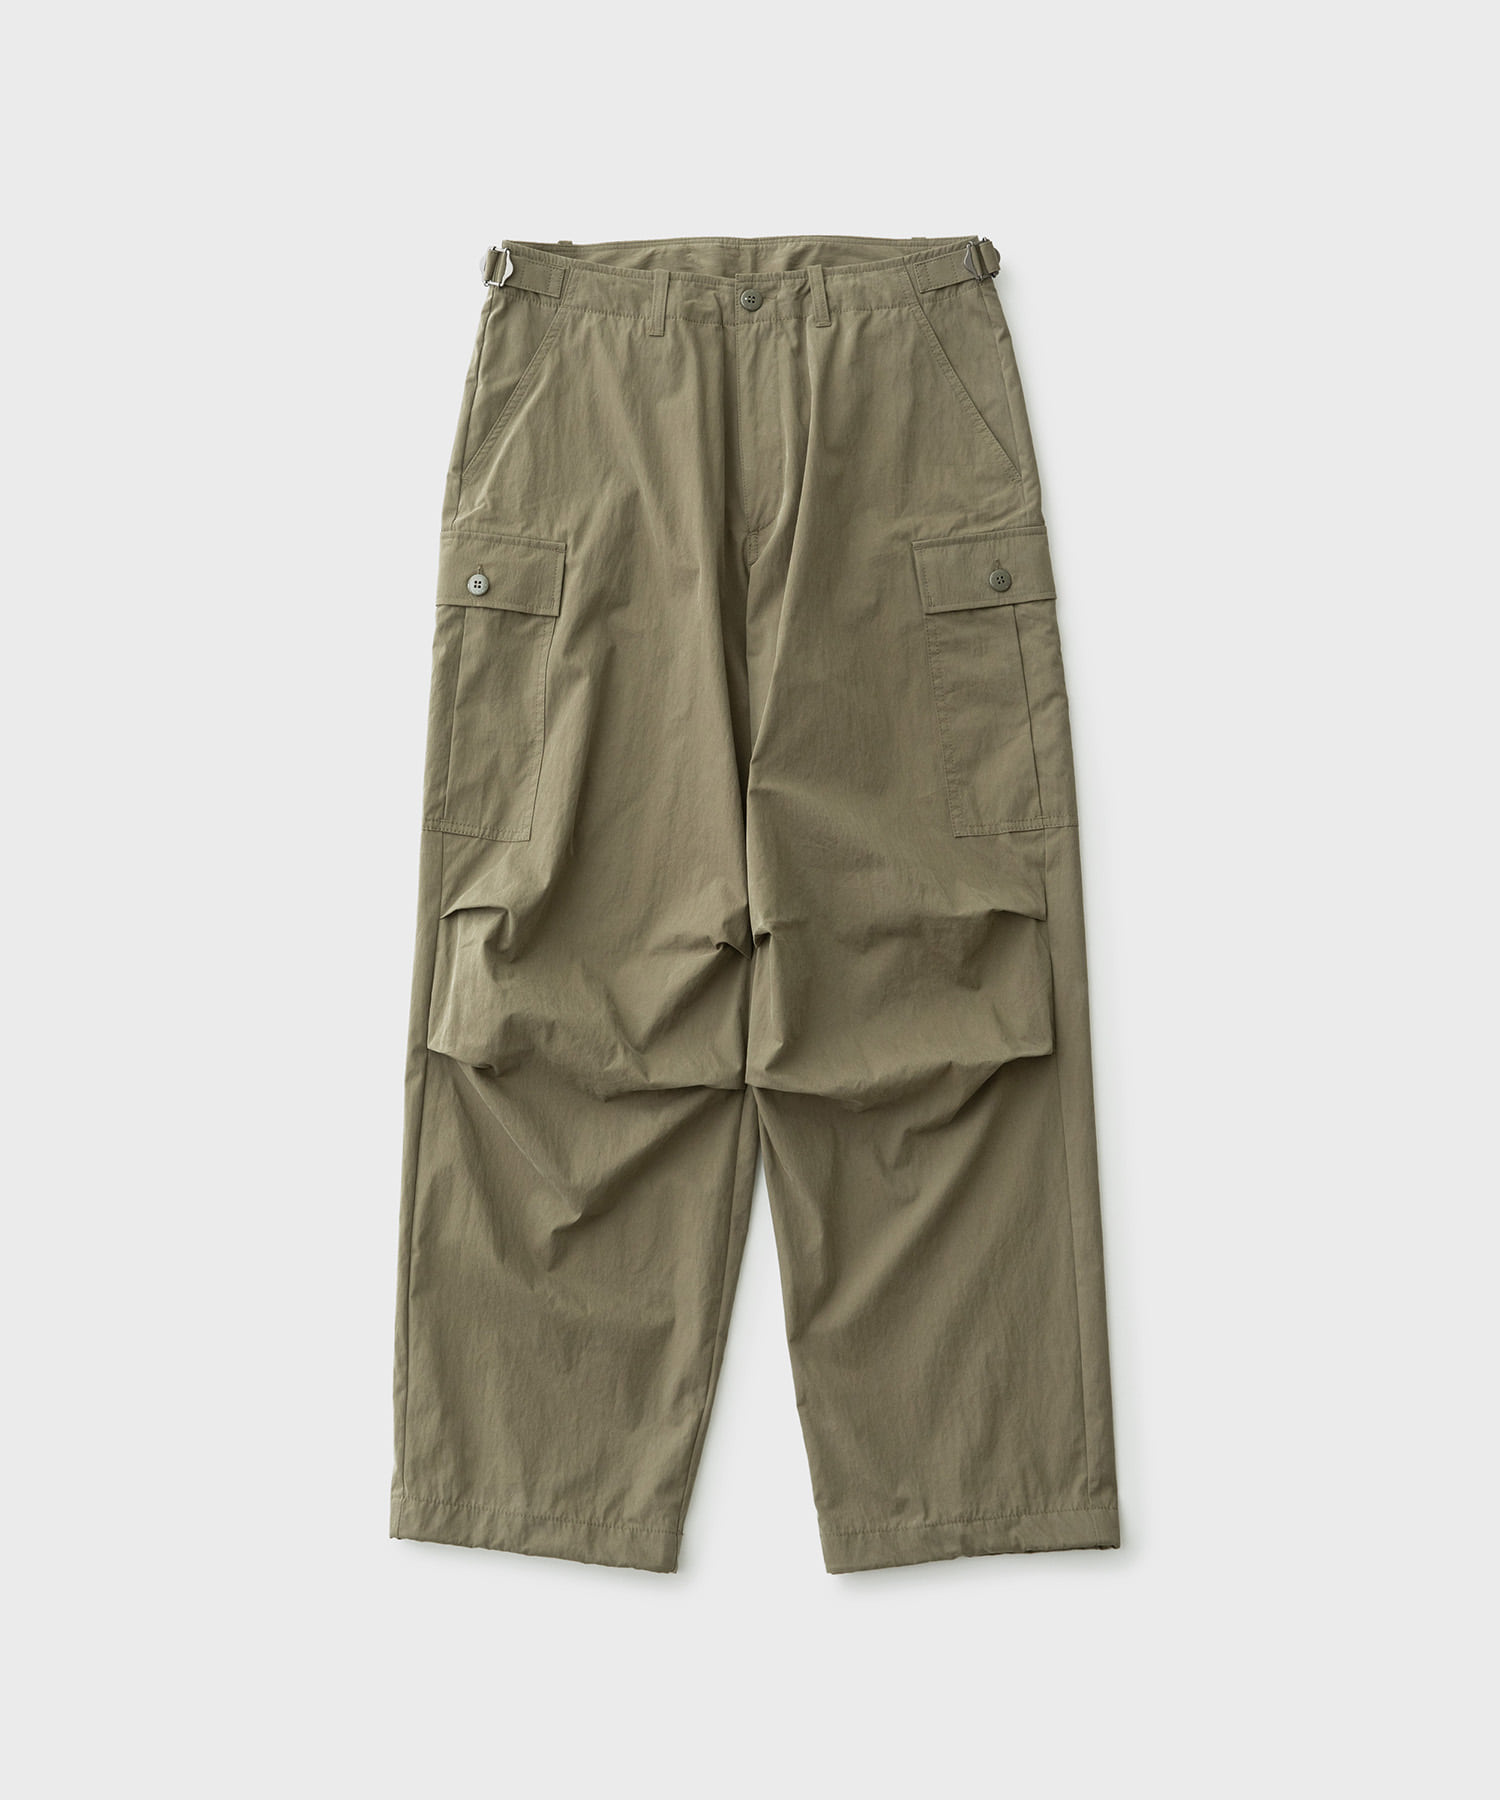 22AW M51 Field Pants (Olive Drab)